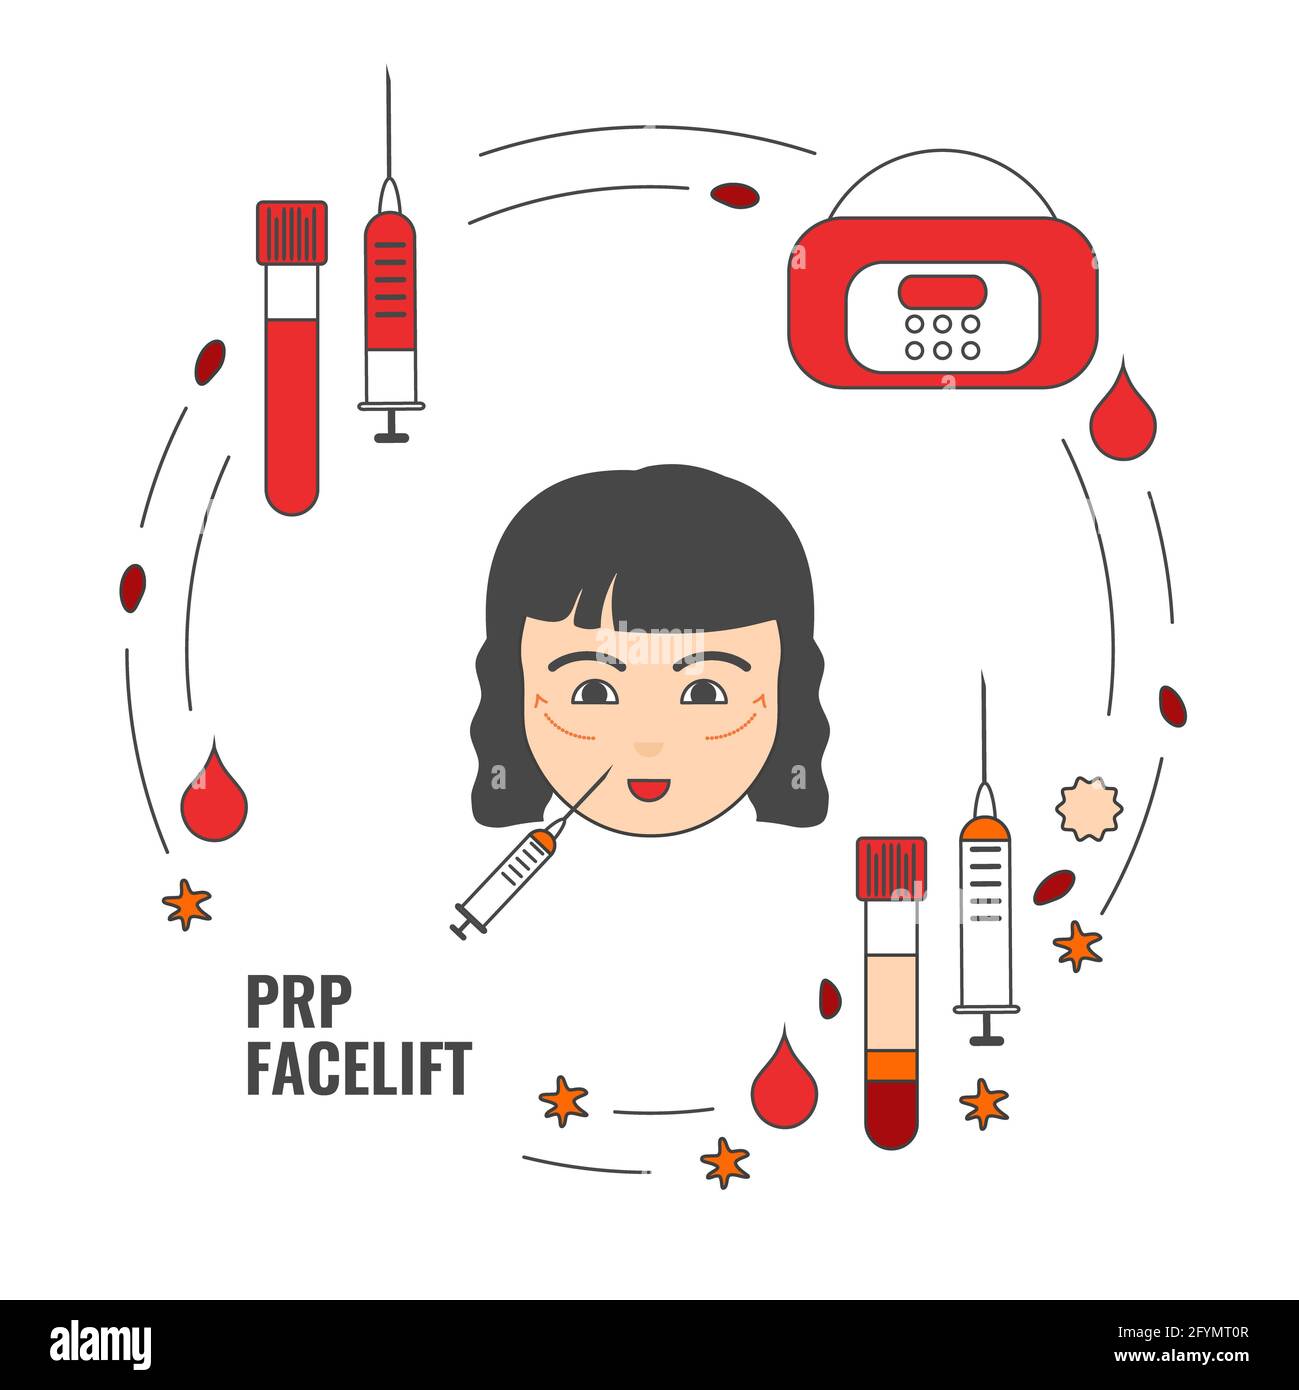 PRP for face rejuvenation, illustration Stock Photo